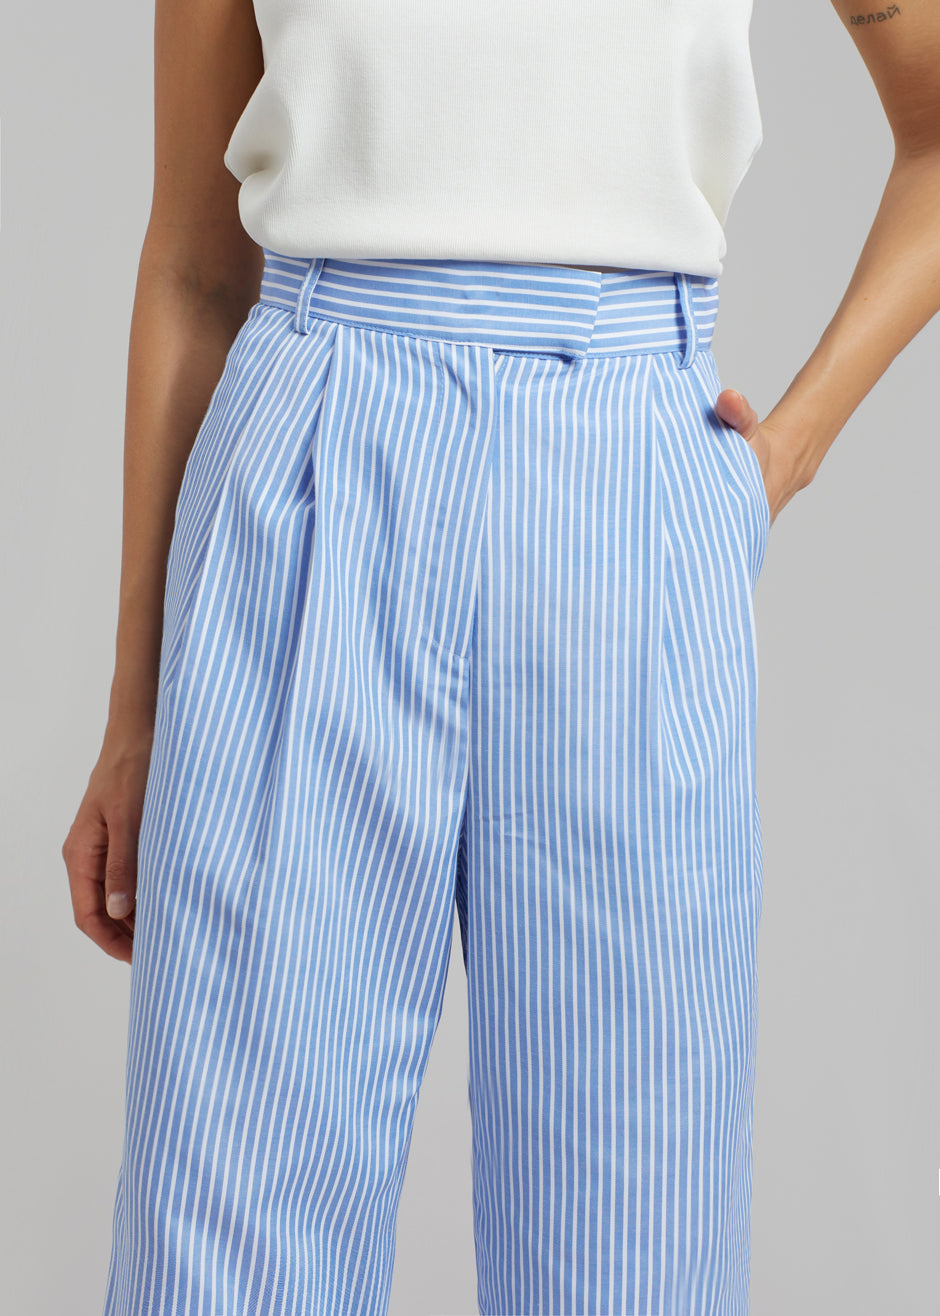 Bea Stripe Suit Pants - White/Light Blue - 1